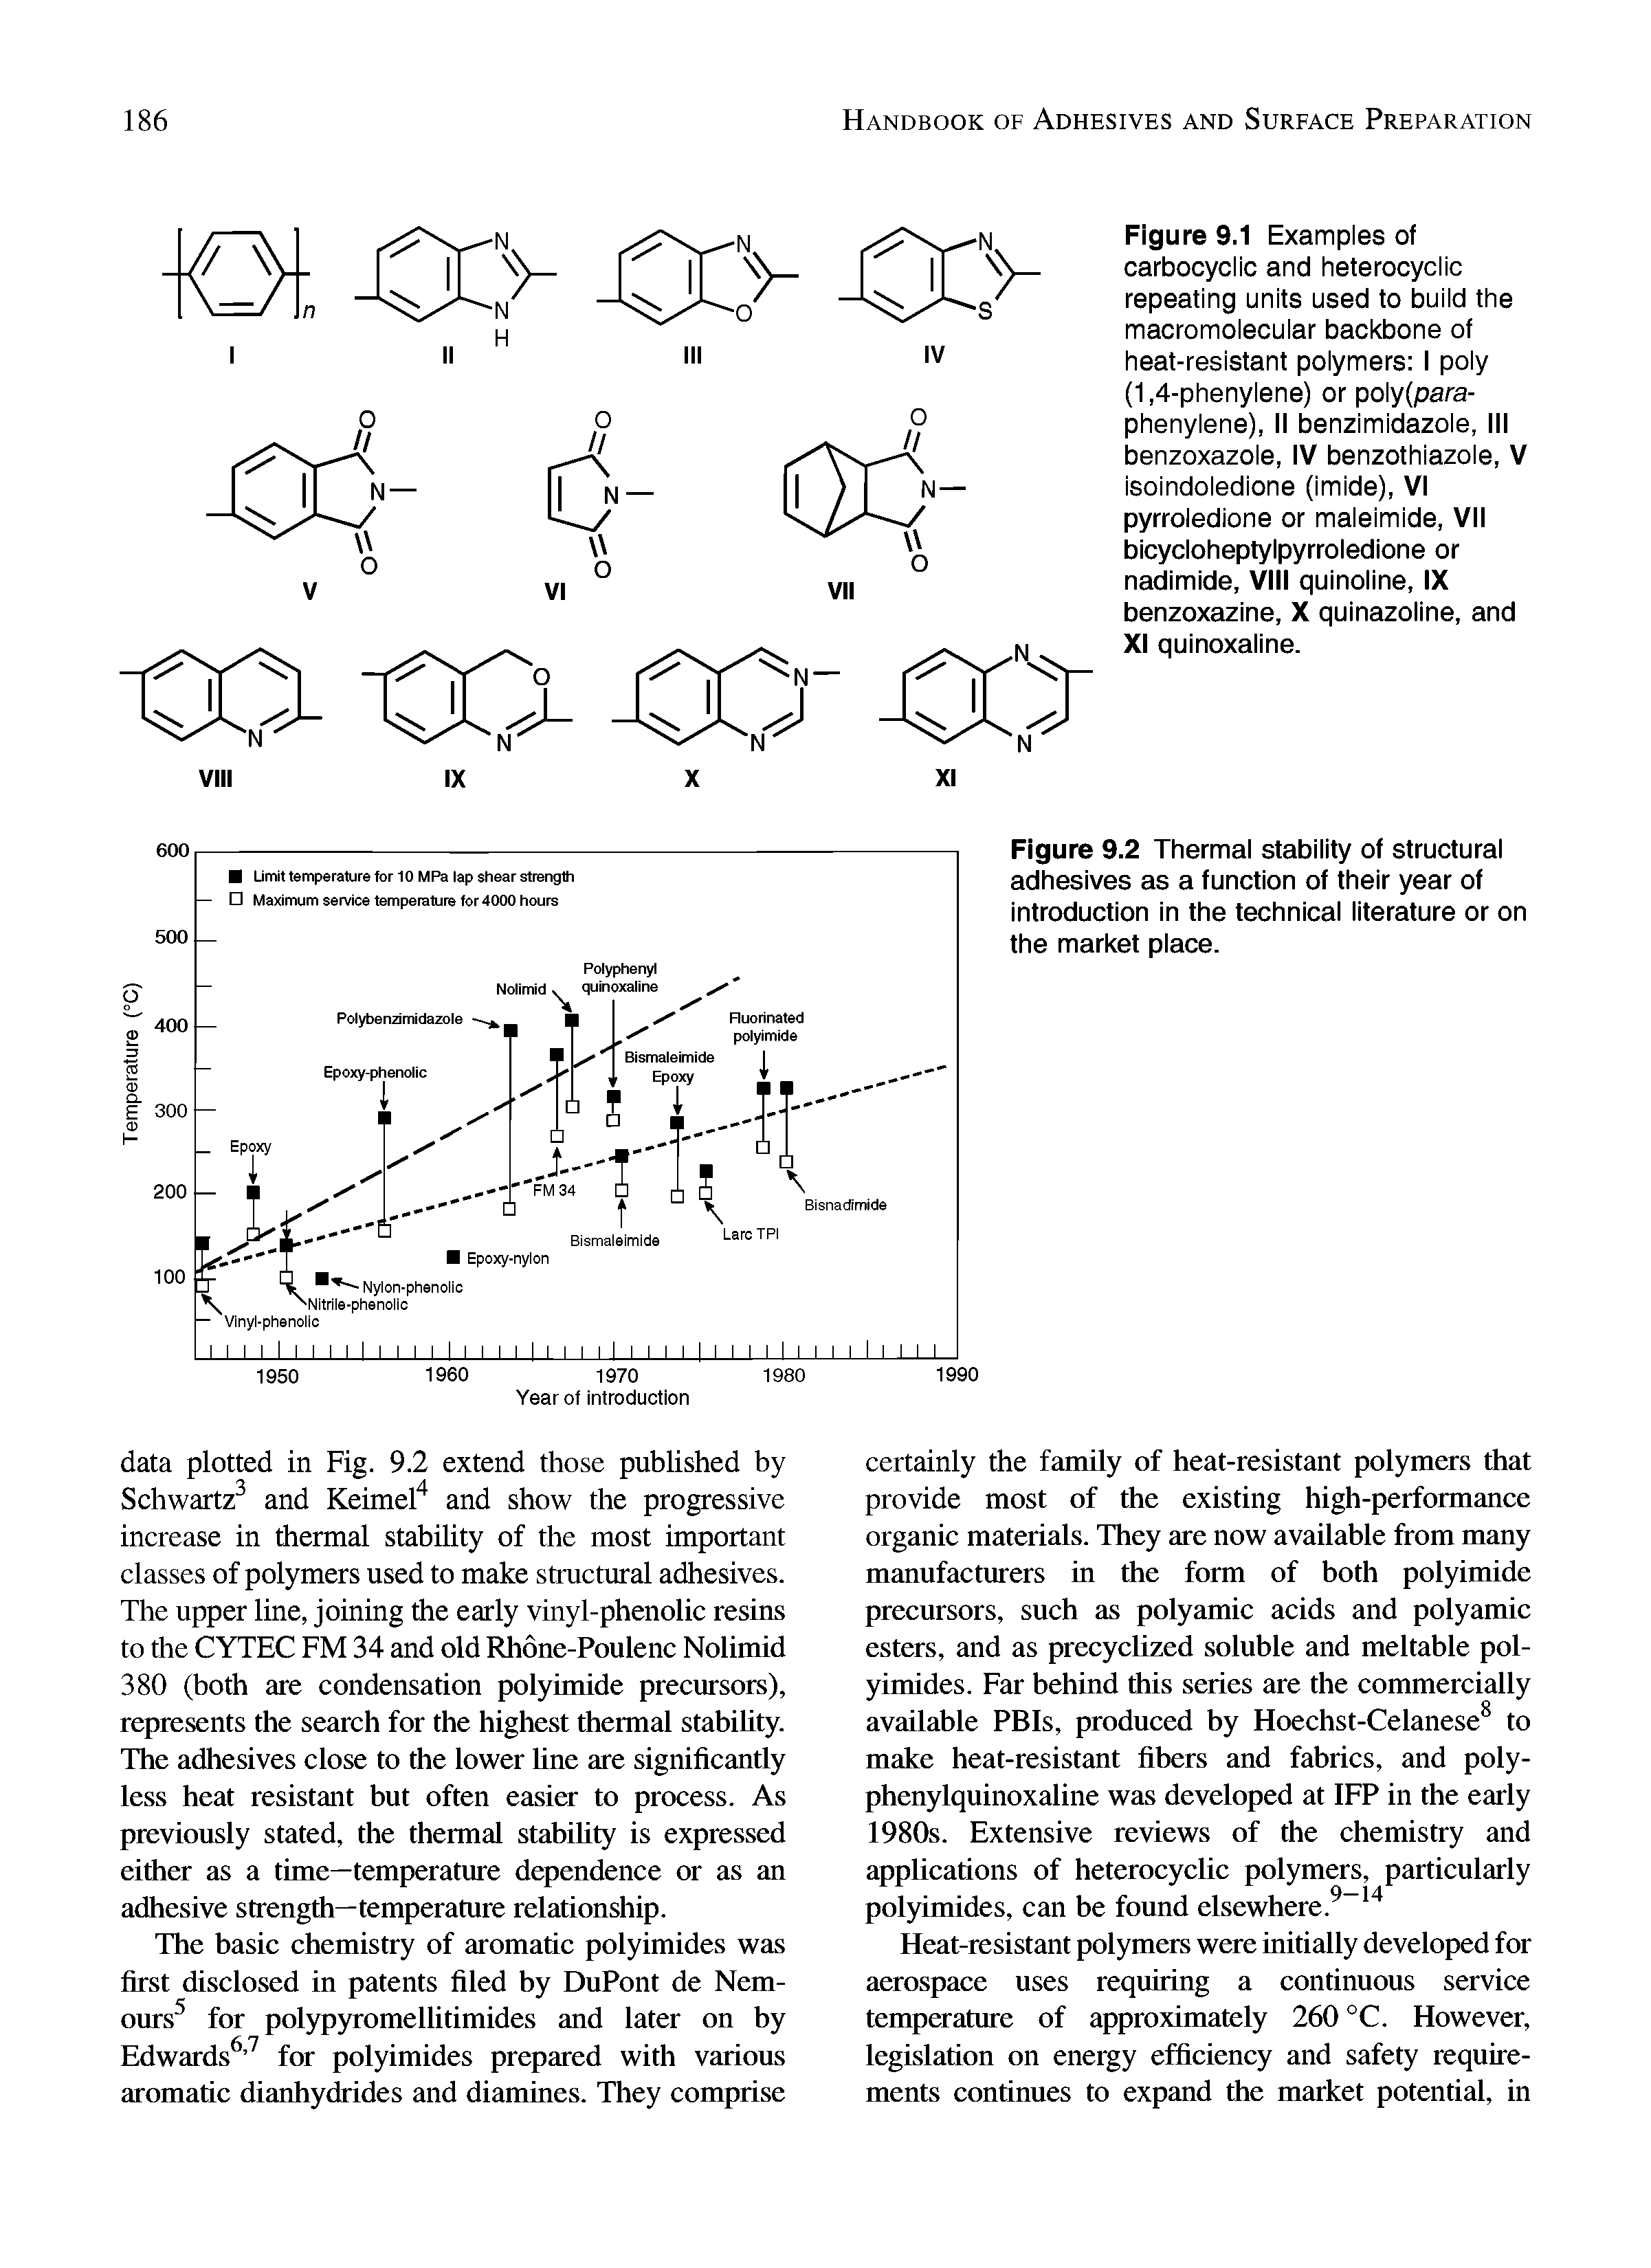 Figure 9.1 Examples of carbocyclic and heterocyclic repeating units used to build the macromolecular backbone of heat-resistant polymers I poly (1,4-phenylene) or poly(para-phenylene), II benzimidazole, III benzoxazole, IV benzothiazole, V isoindoledione (imide), VI pyrroledione or maleimide, VII bicycloheptylpyrroledione or nadimide, VIII quinoline, IX benzoxazine, X quinazoline, and XI quinoxaline.